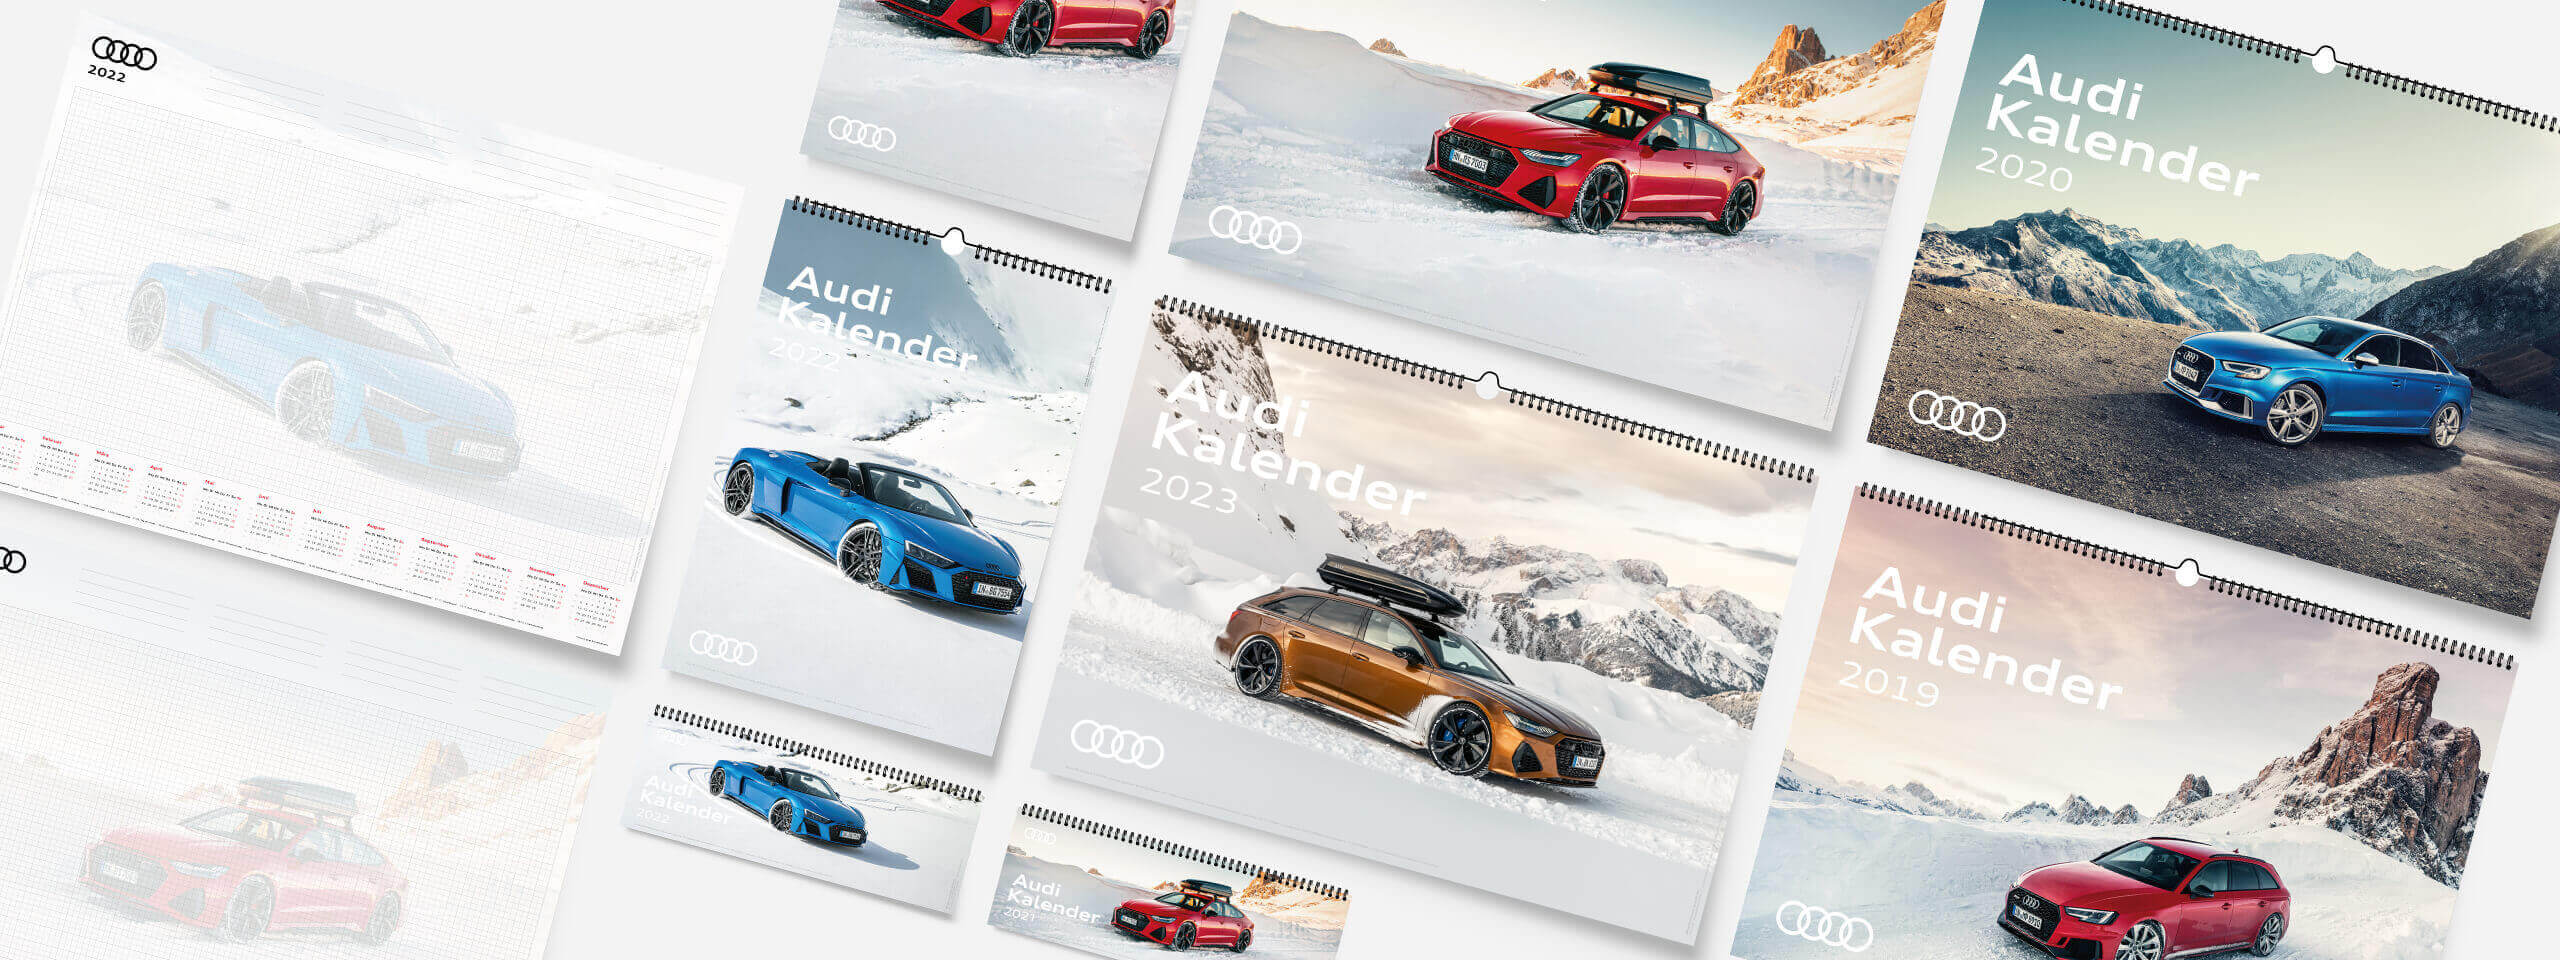 Audi Wandkalender